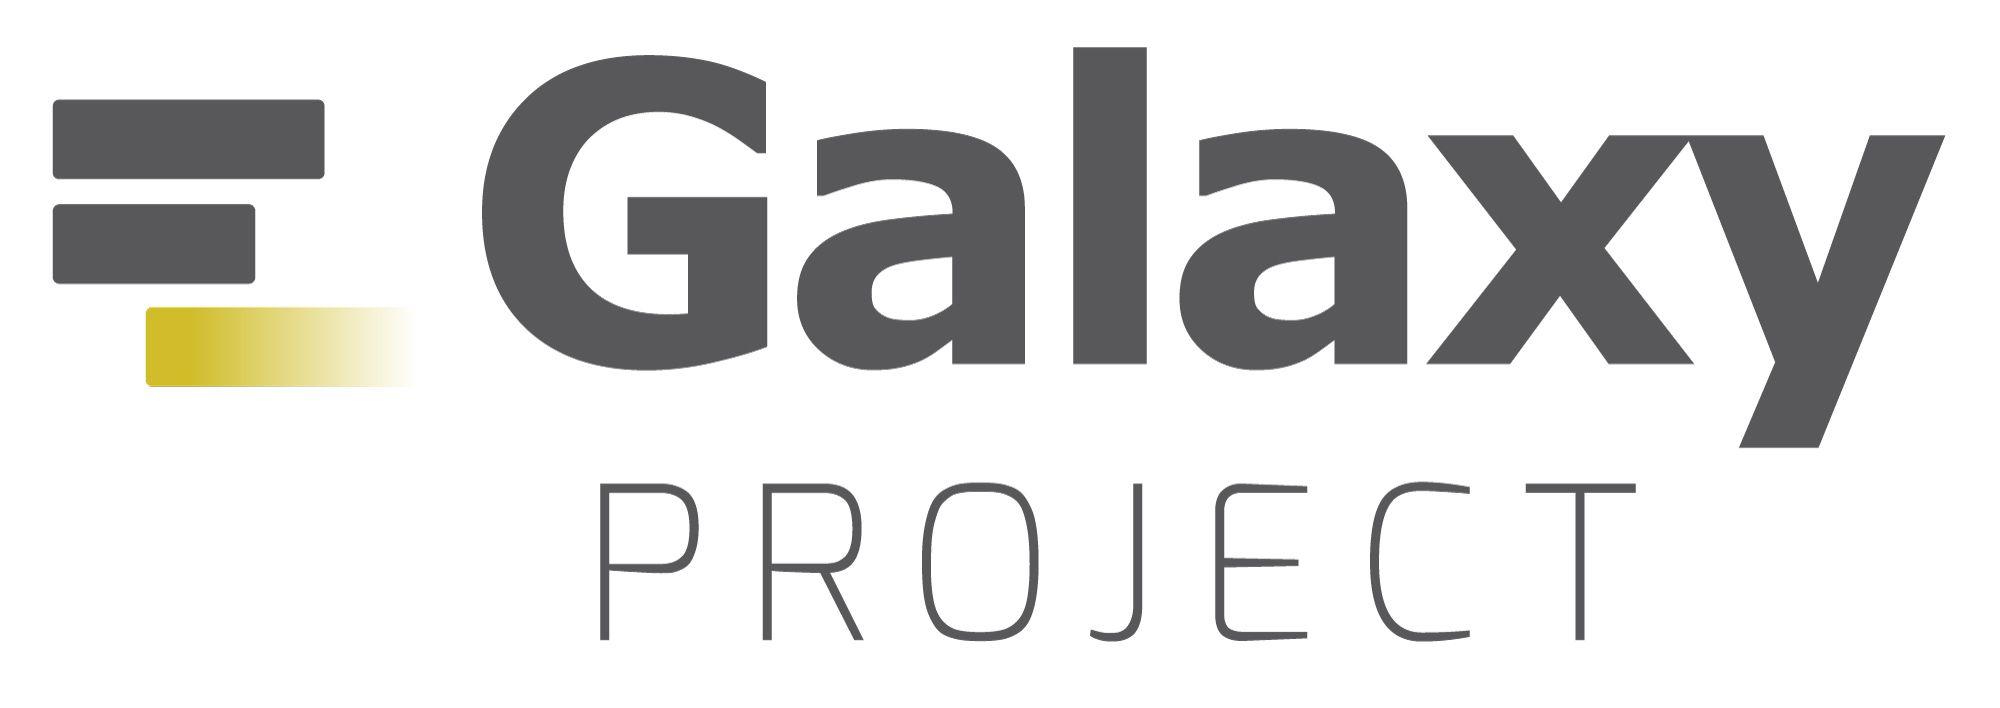 Galaxy Logo - Galaxy Project Logos